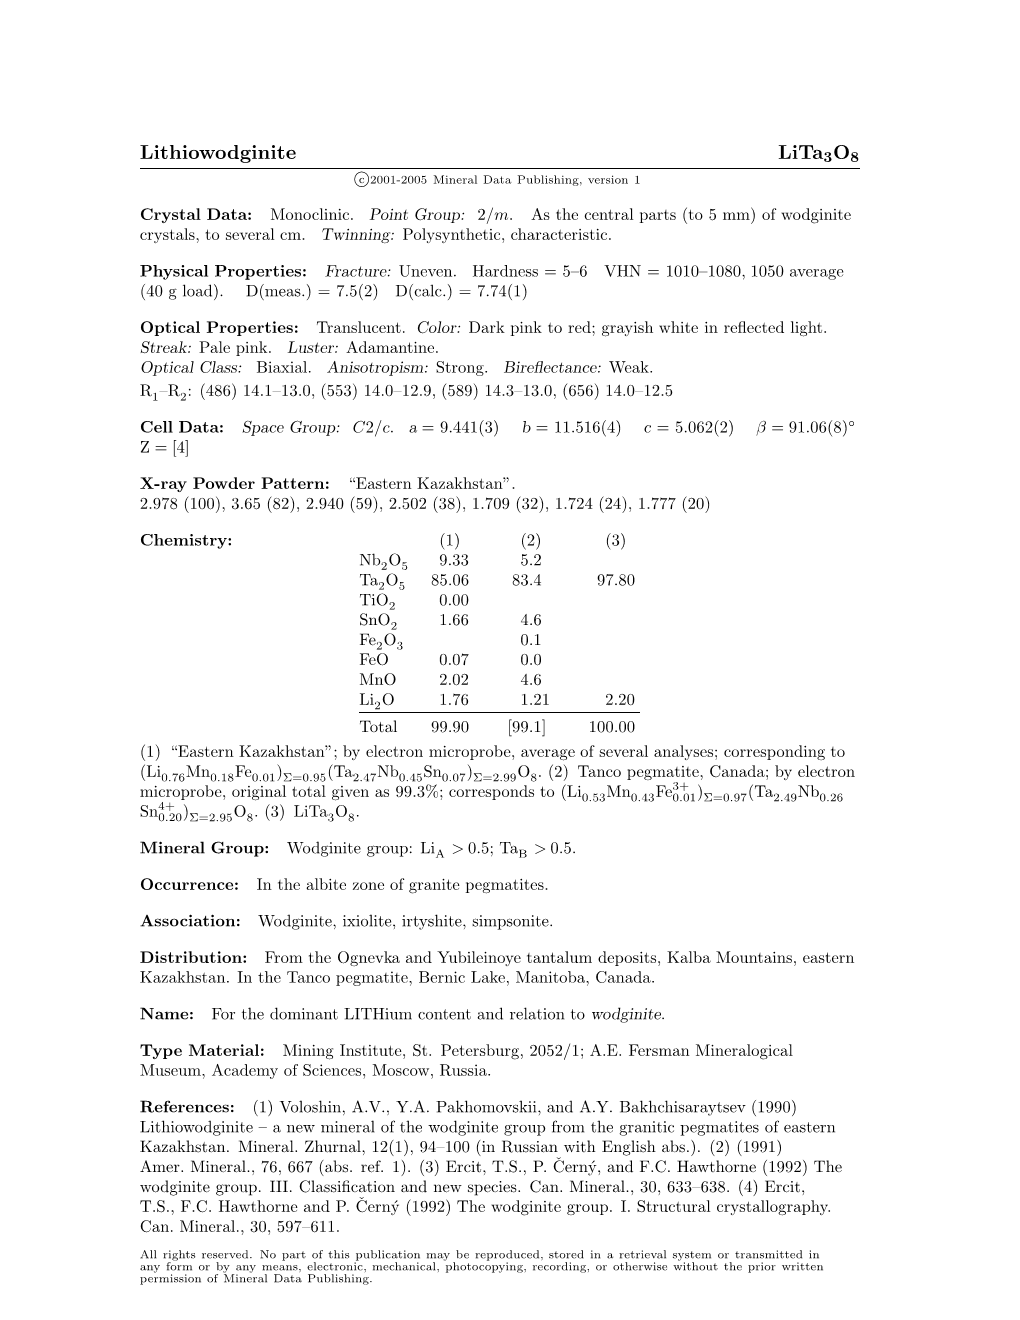 Lithiowodginite Lita3o8 C 2001-2005 Mineral Data Publishing, Version 1